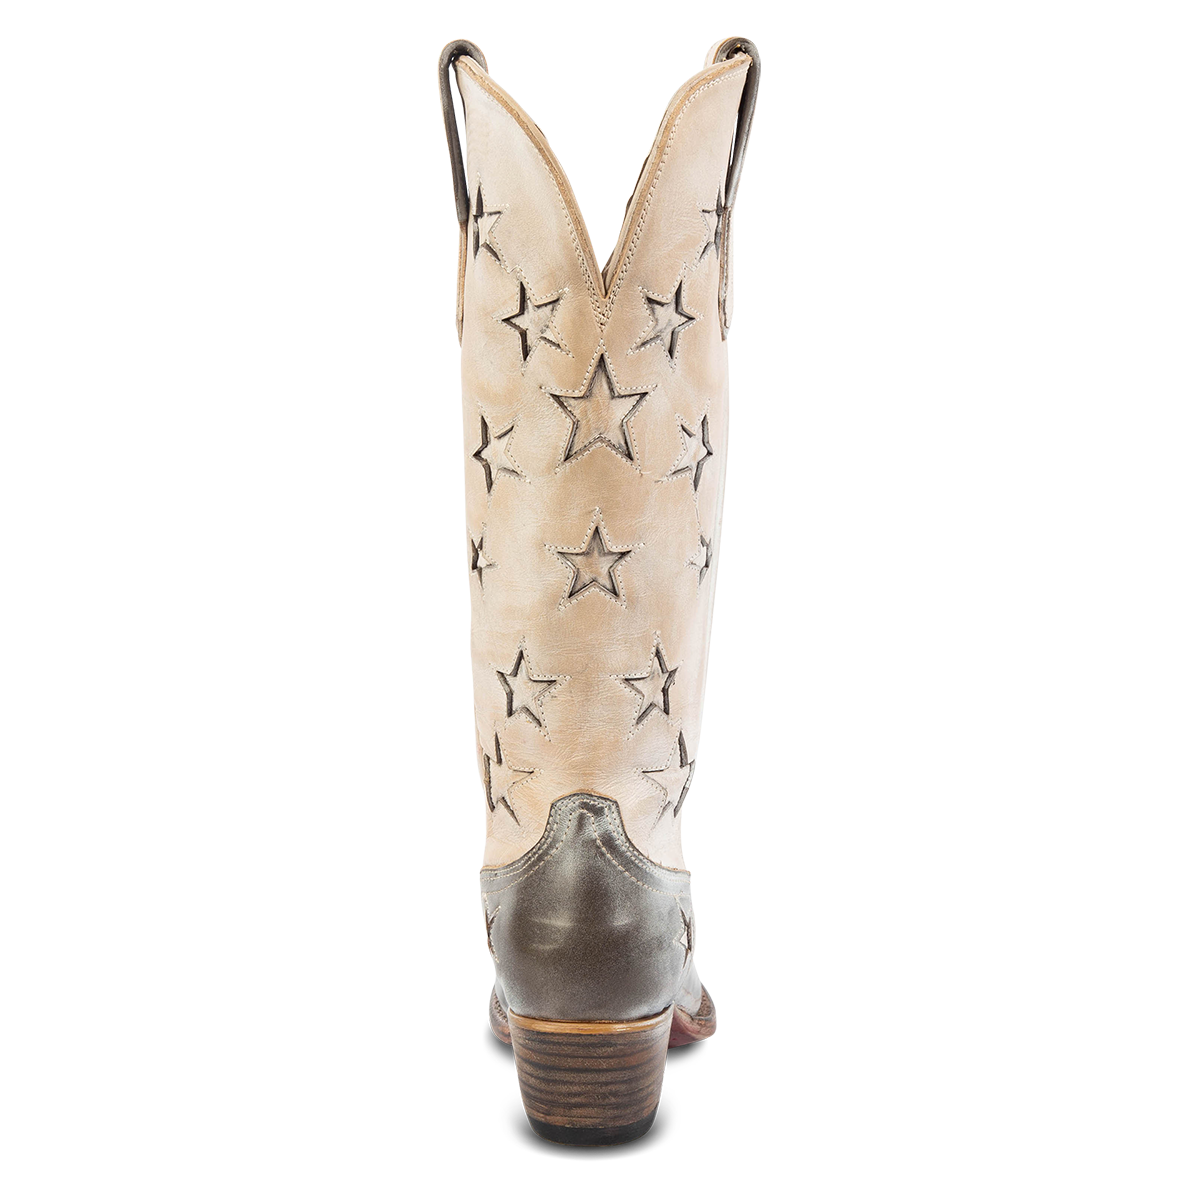 Back view showing star inlay detailing and low heel on FREEBIRD women's Starzz beige western boot